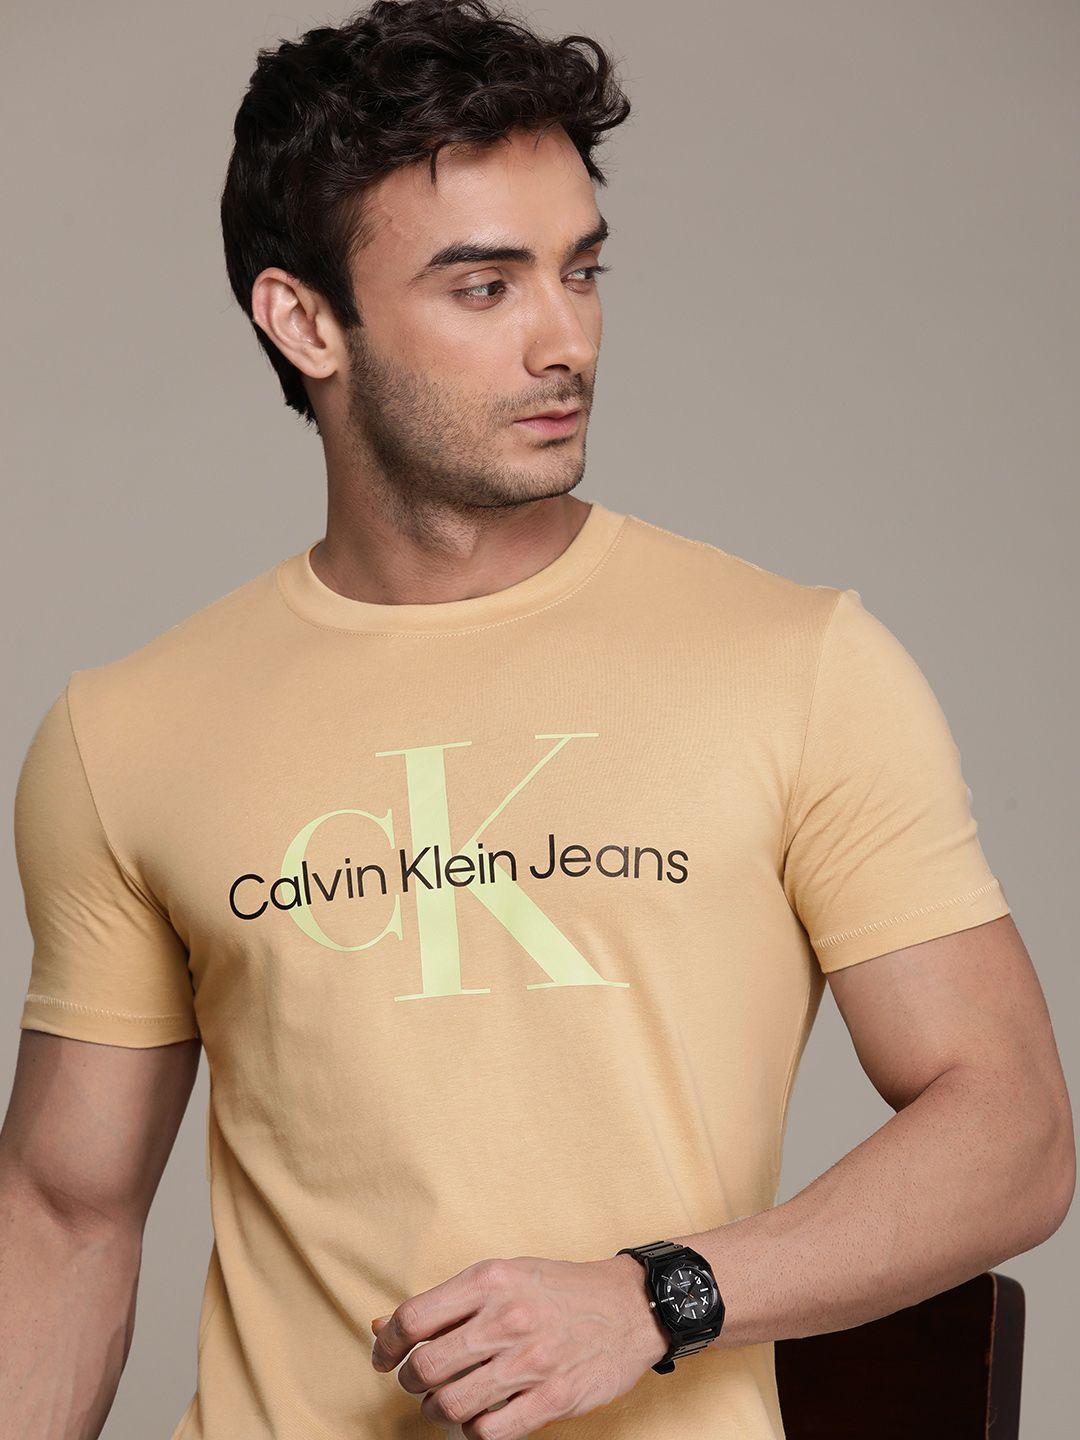 calvin klein jeans brand logo printed pure cotton slim fit t-shirt